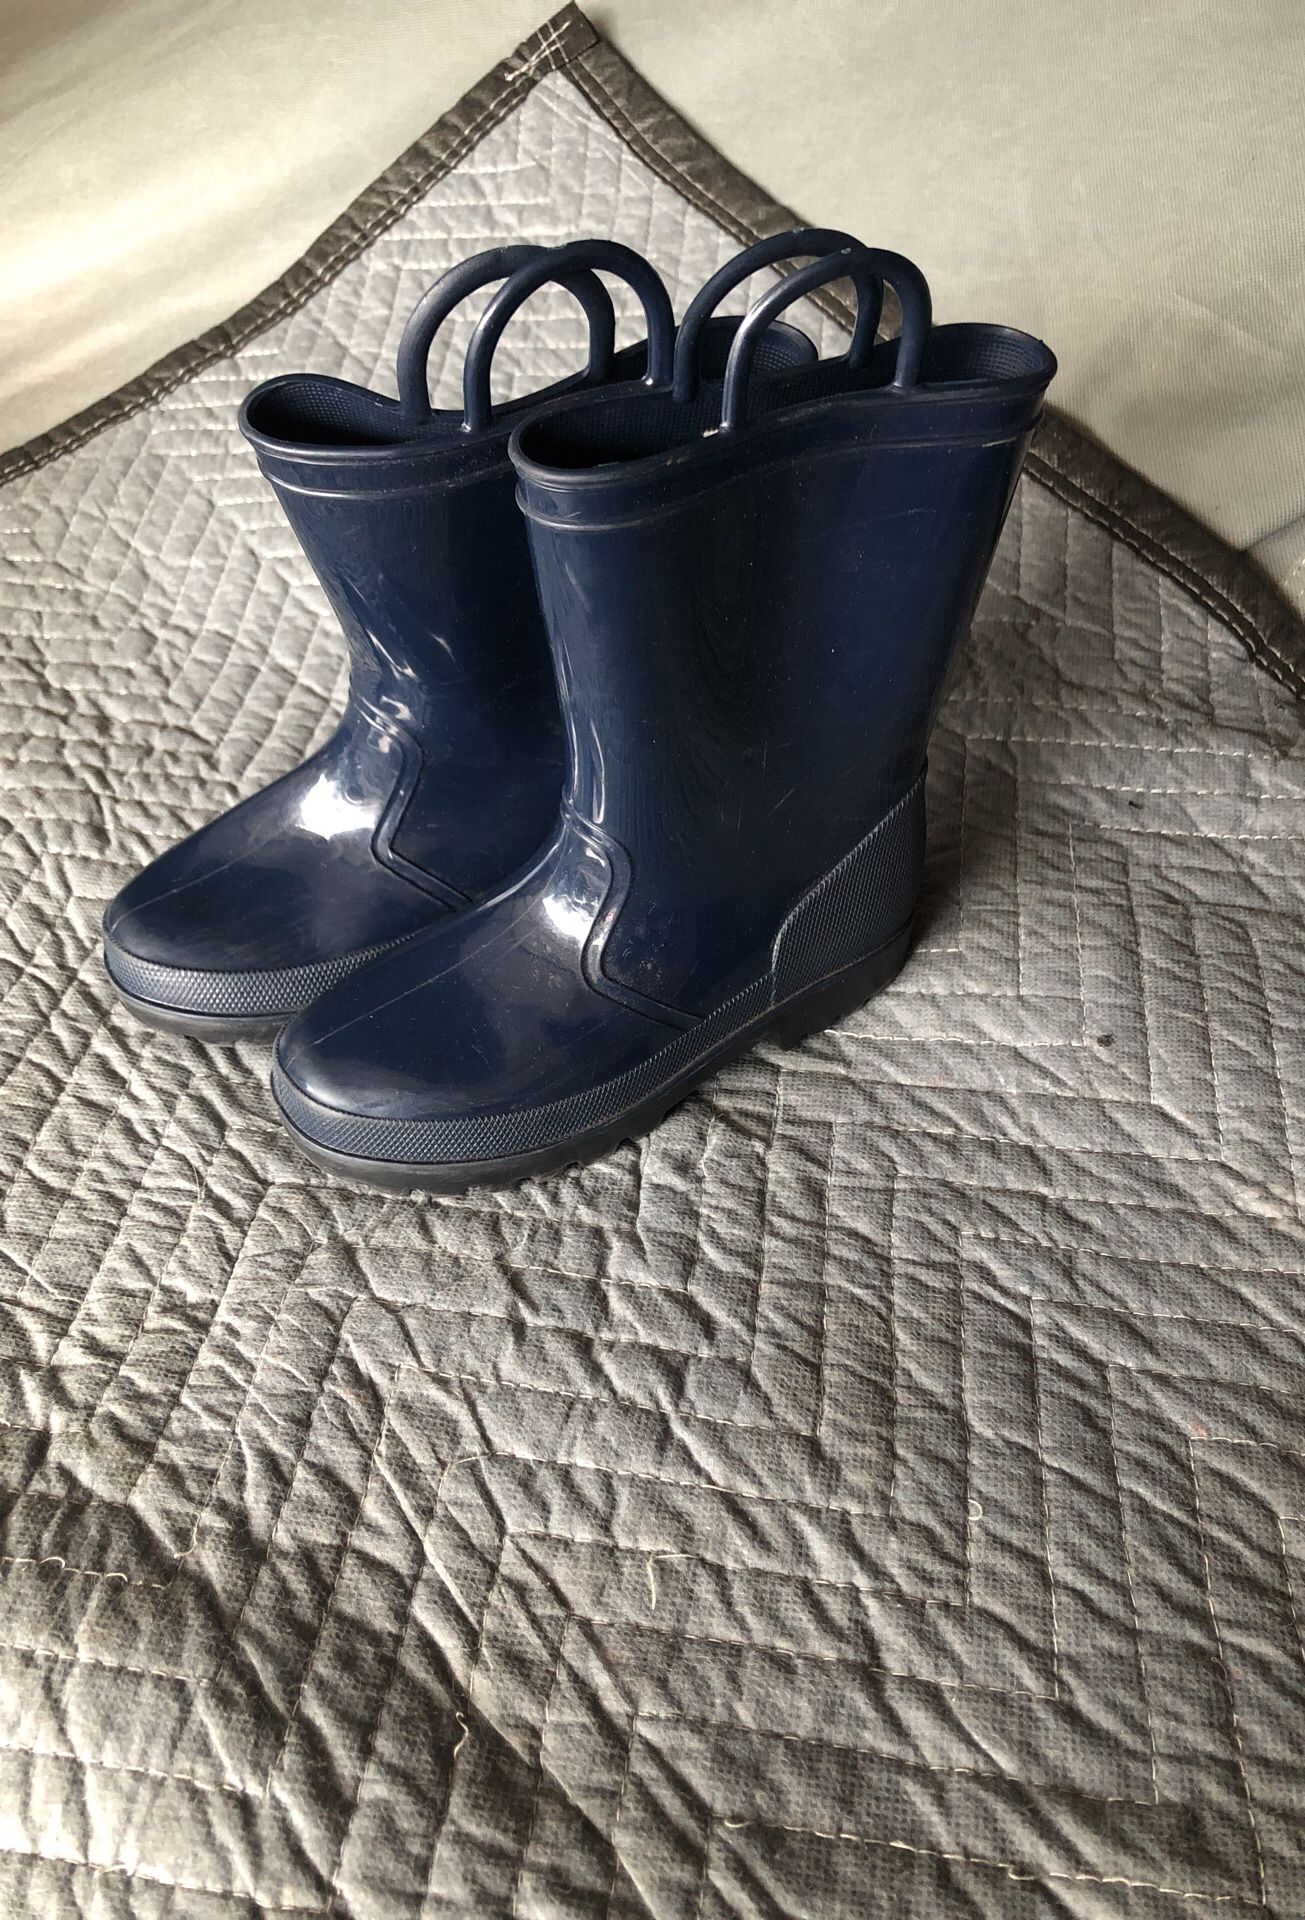 Kids rain boots size 12